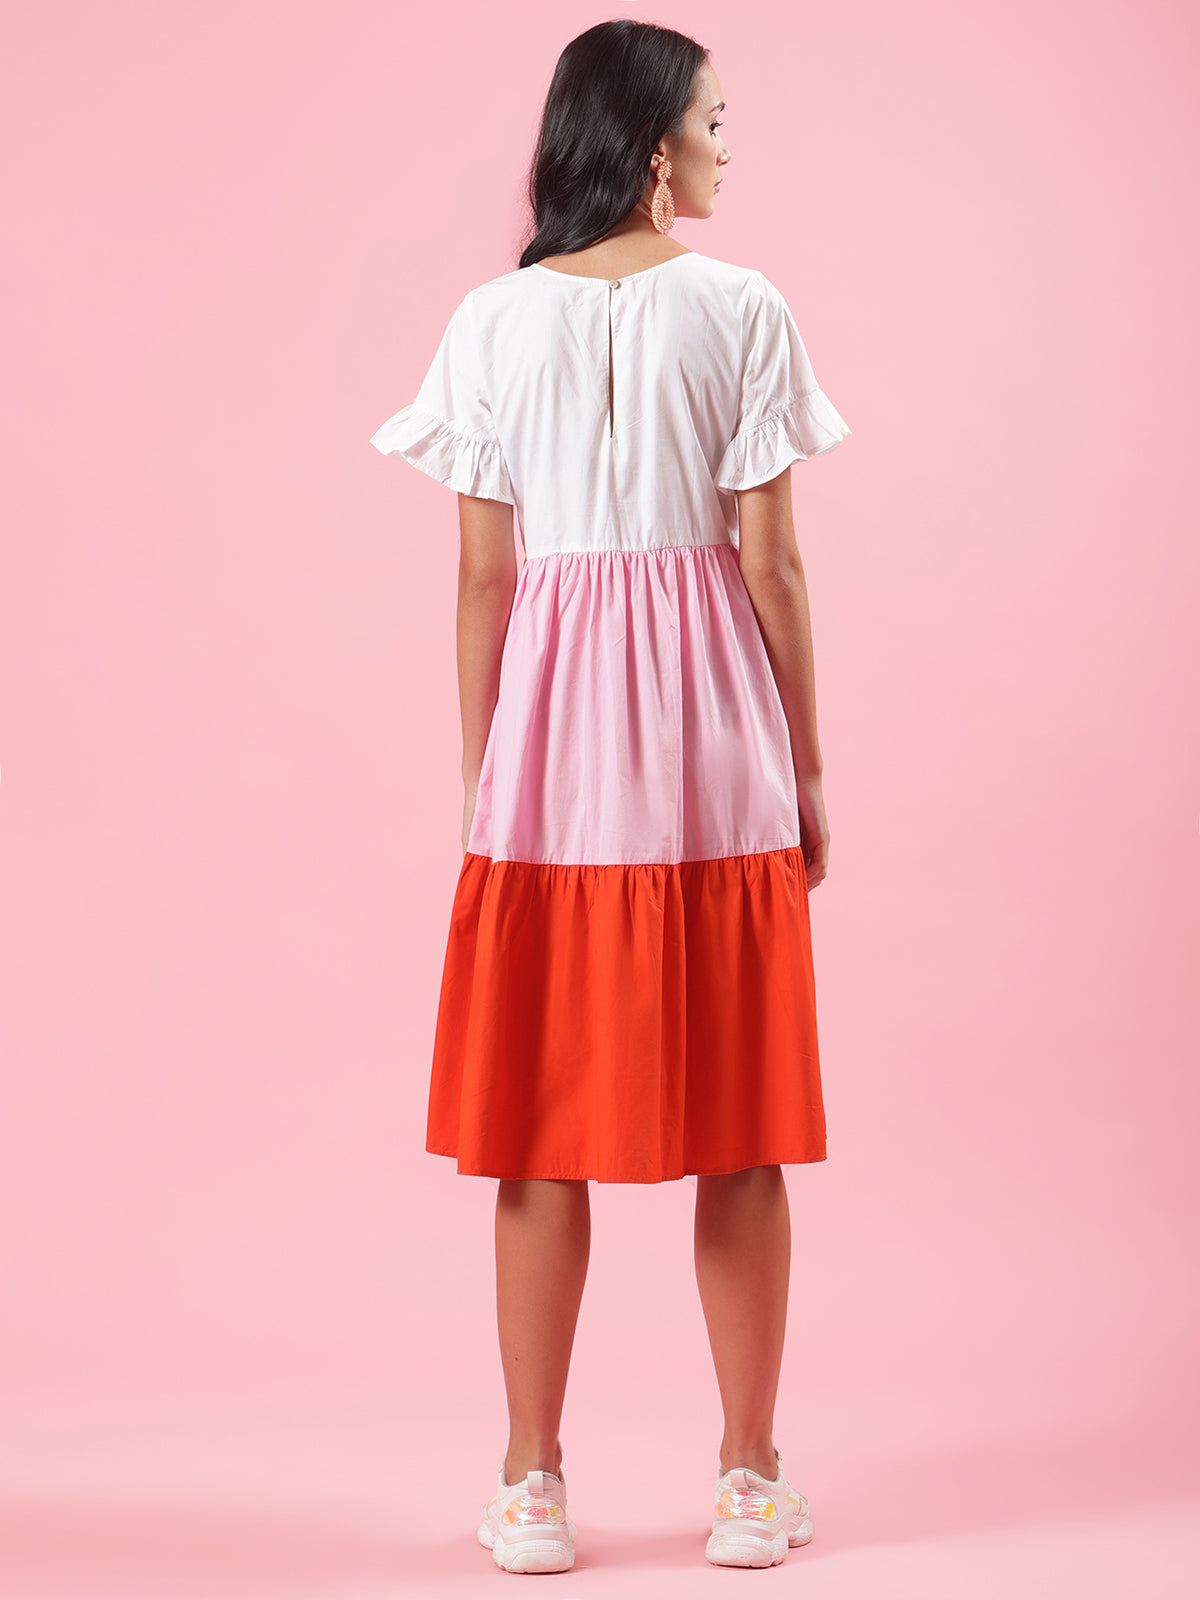 Candy Floss Womens Cotton Summer Tier Dress in White Pink Orange